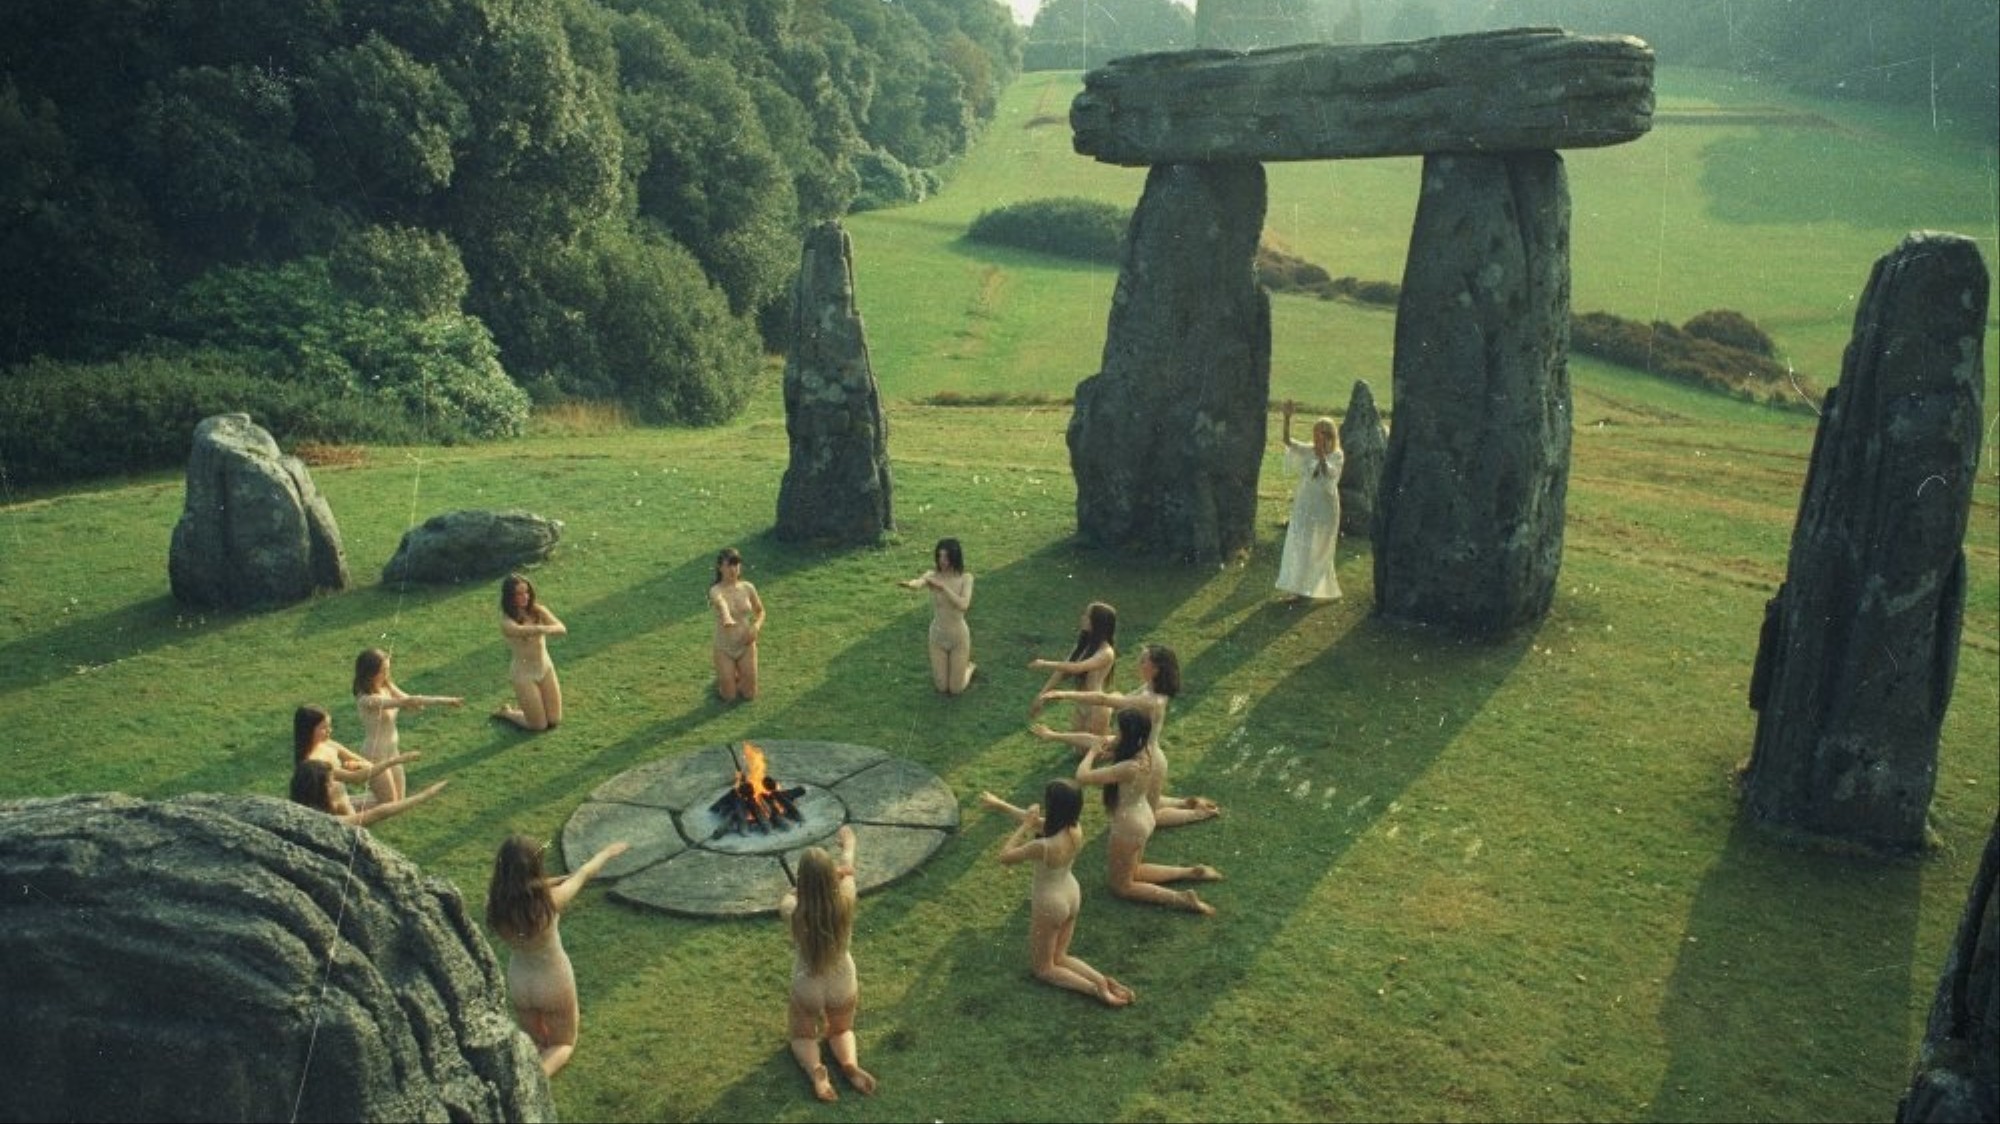 wicker-man-1973-002-stone-circle-dancers-00m-osv